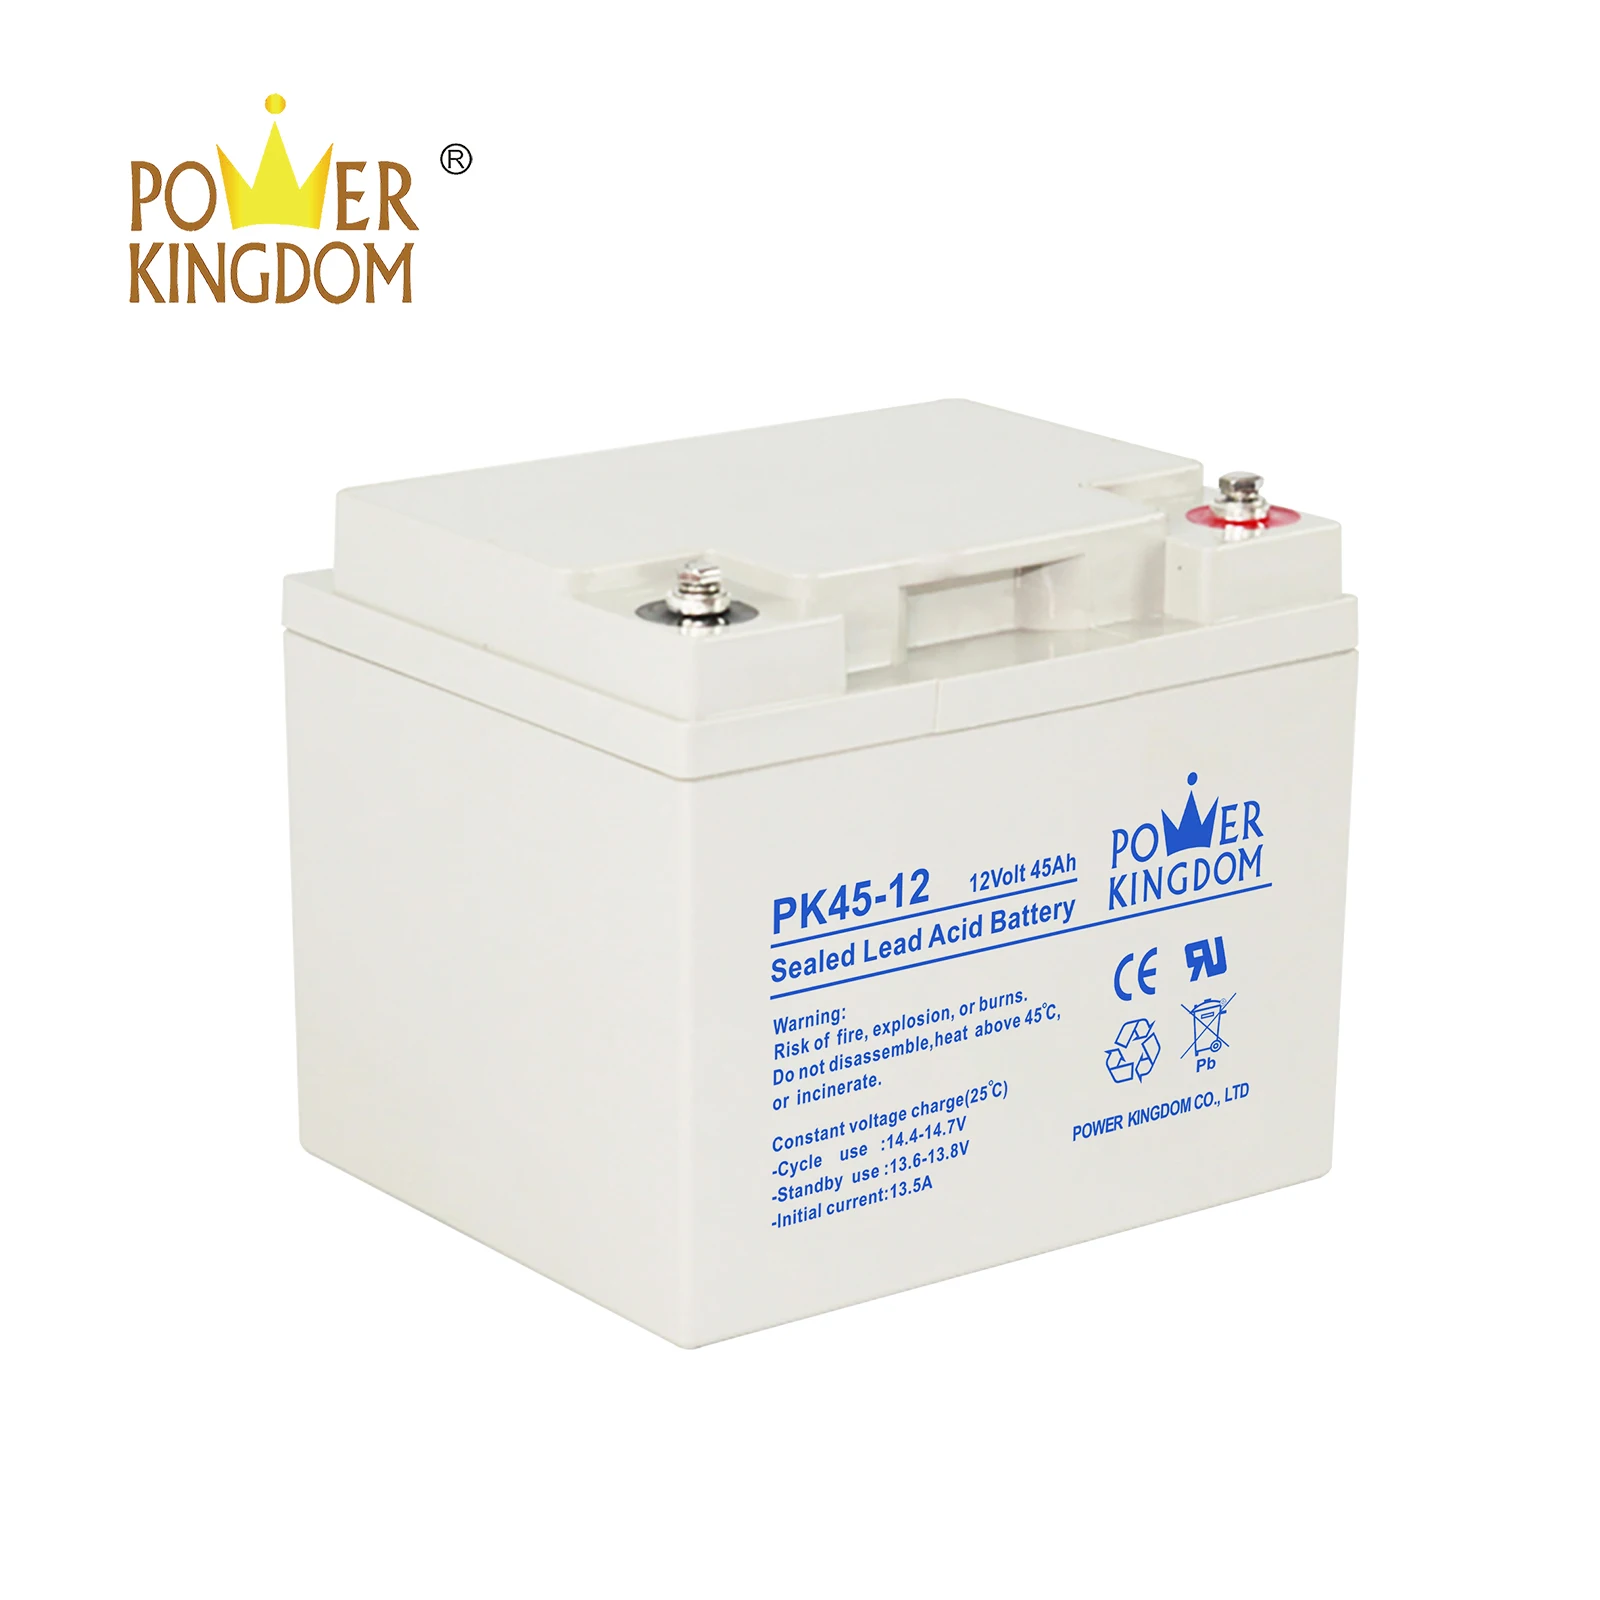 Power Kingdom Latest tubular gel battery technology for business Power tools